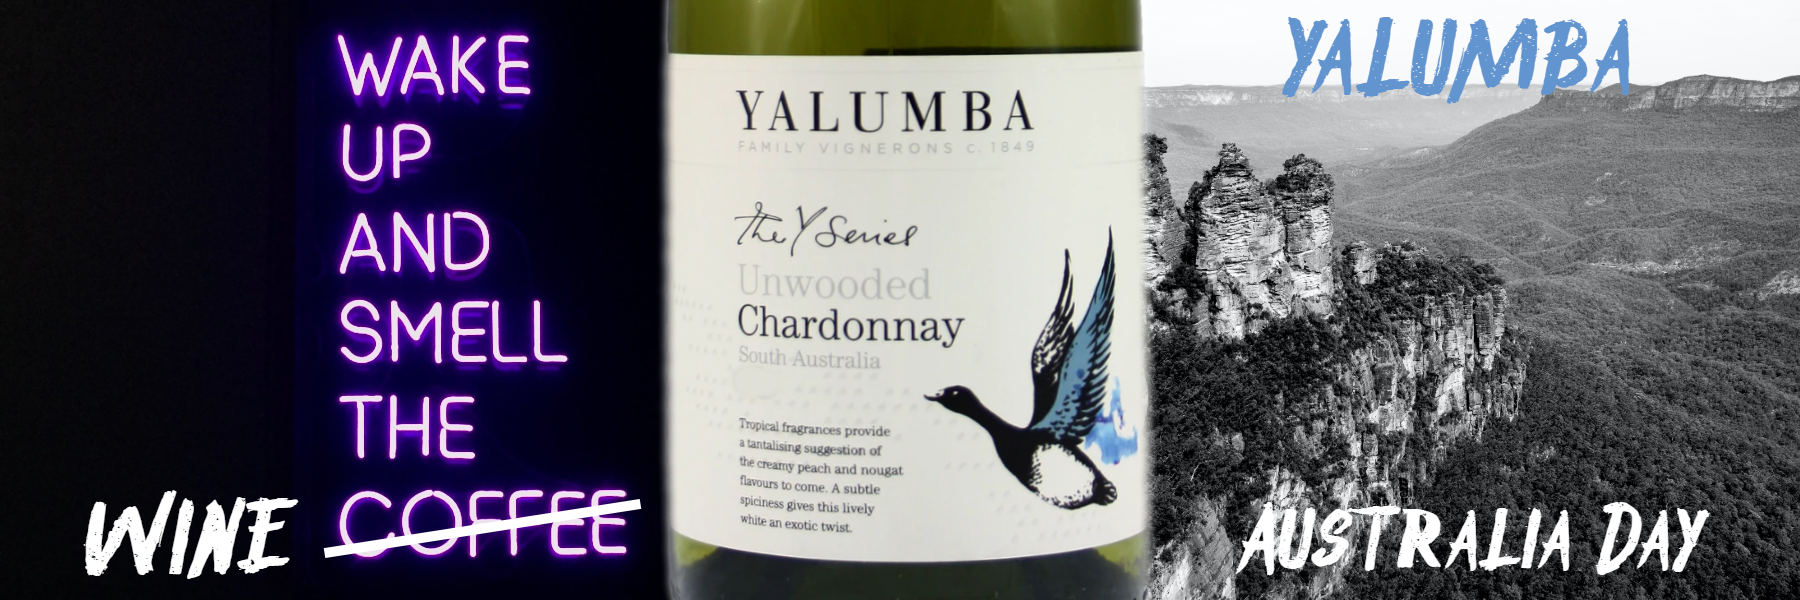 Yalumba "The Y Series" Unwooded Chardonnay, 2019  £11.99/bottle